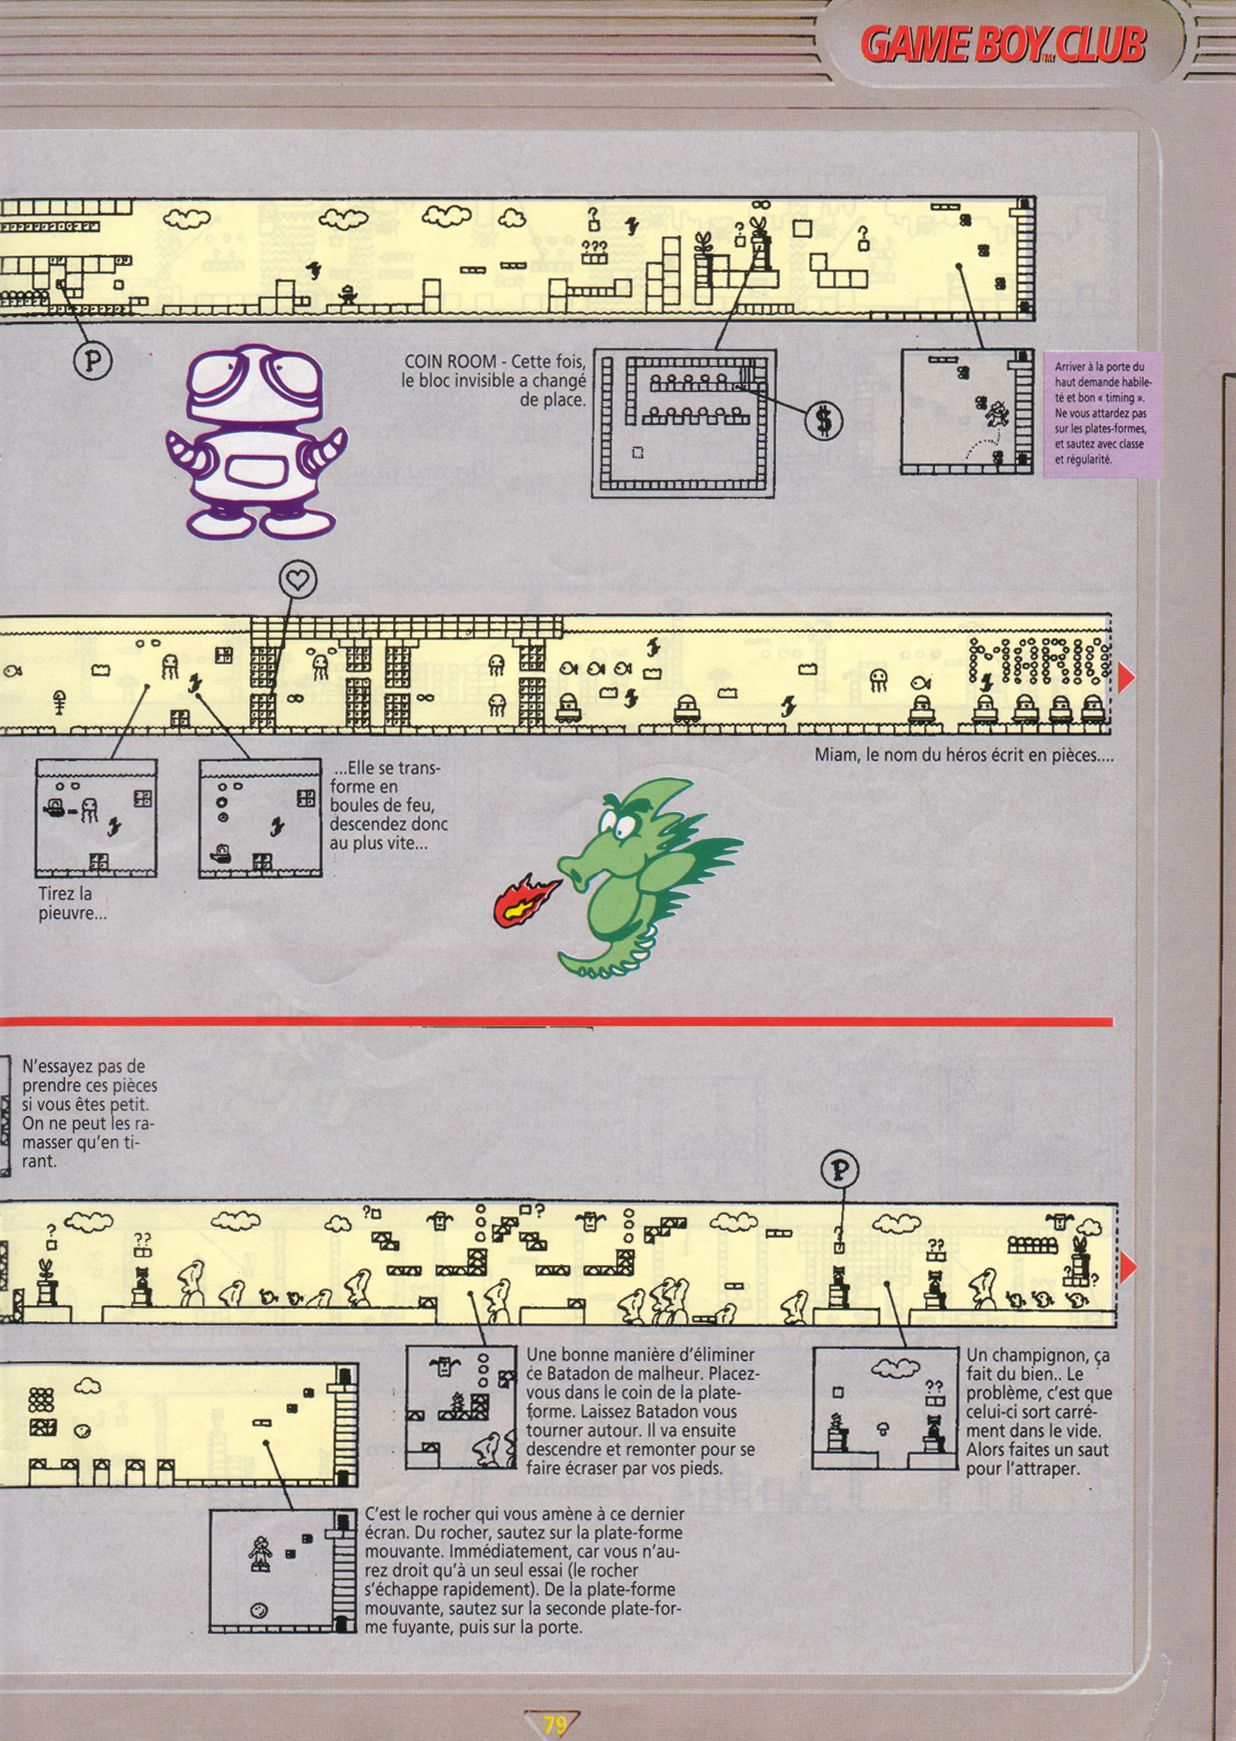 tests//1/Nintendo Player 001 - Page 079 (1991-10-11).jpg